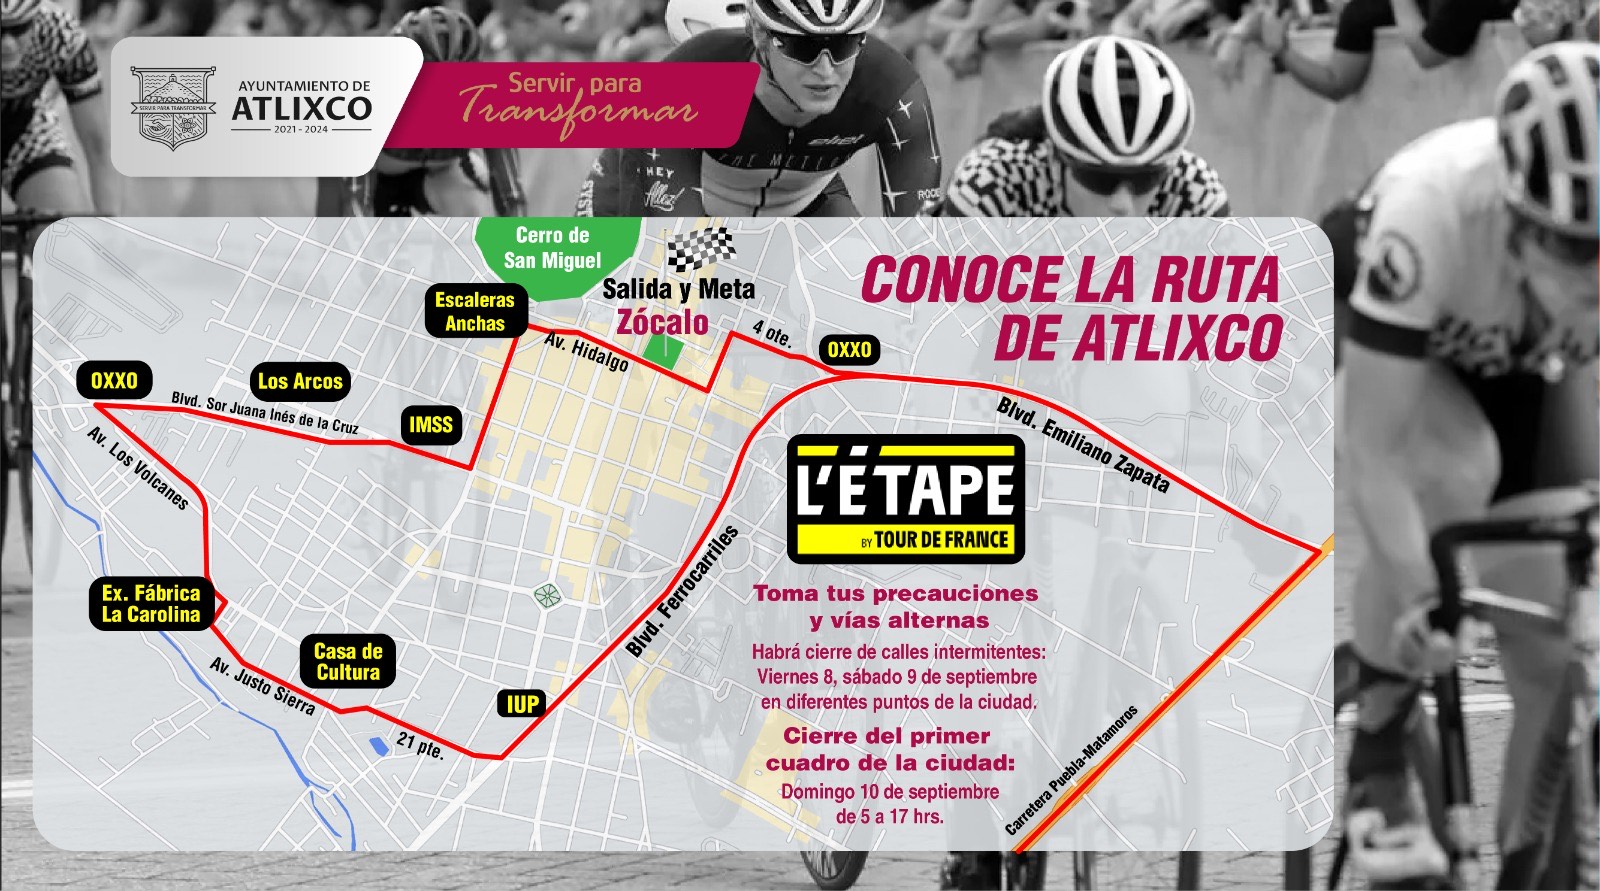 Listo operativo para la L’Etape Puebla by Tour de France 202, en Atlixco